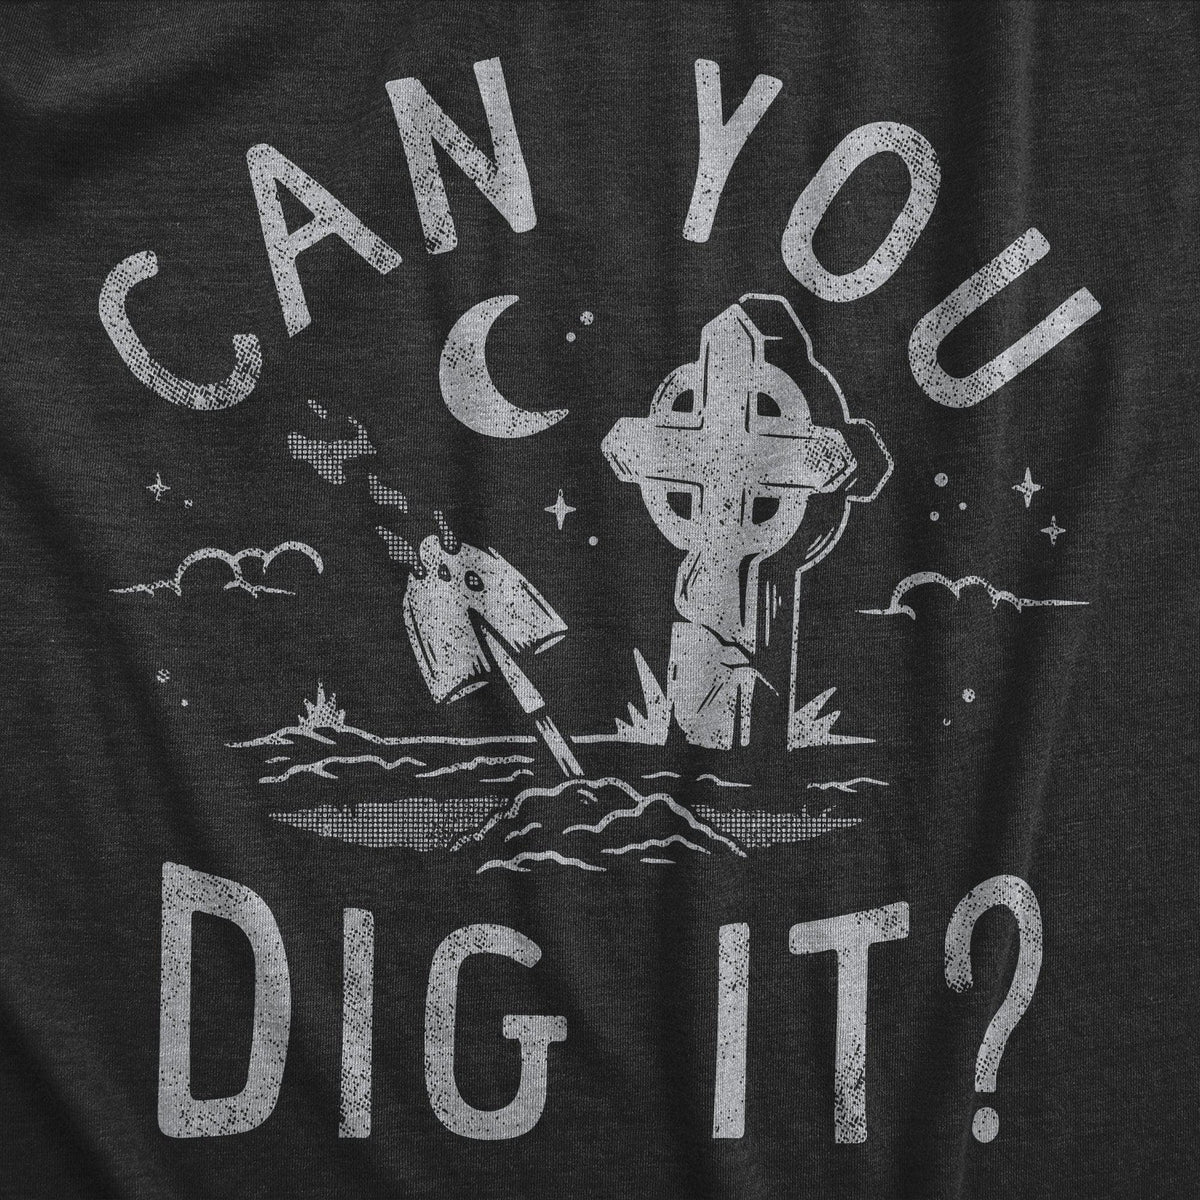 Can You Dig It Men&#39;s Tshirt  -  Crazy Dog T-Shirts